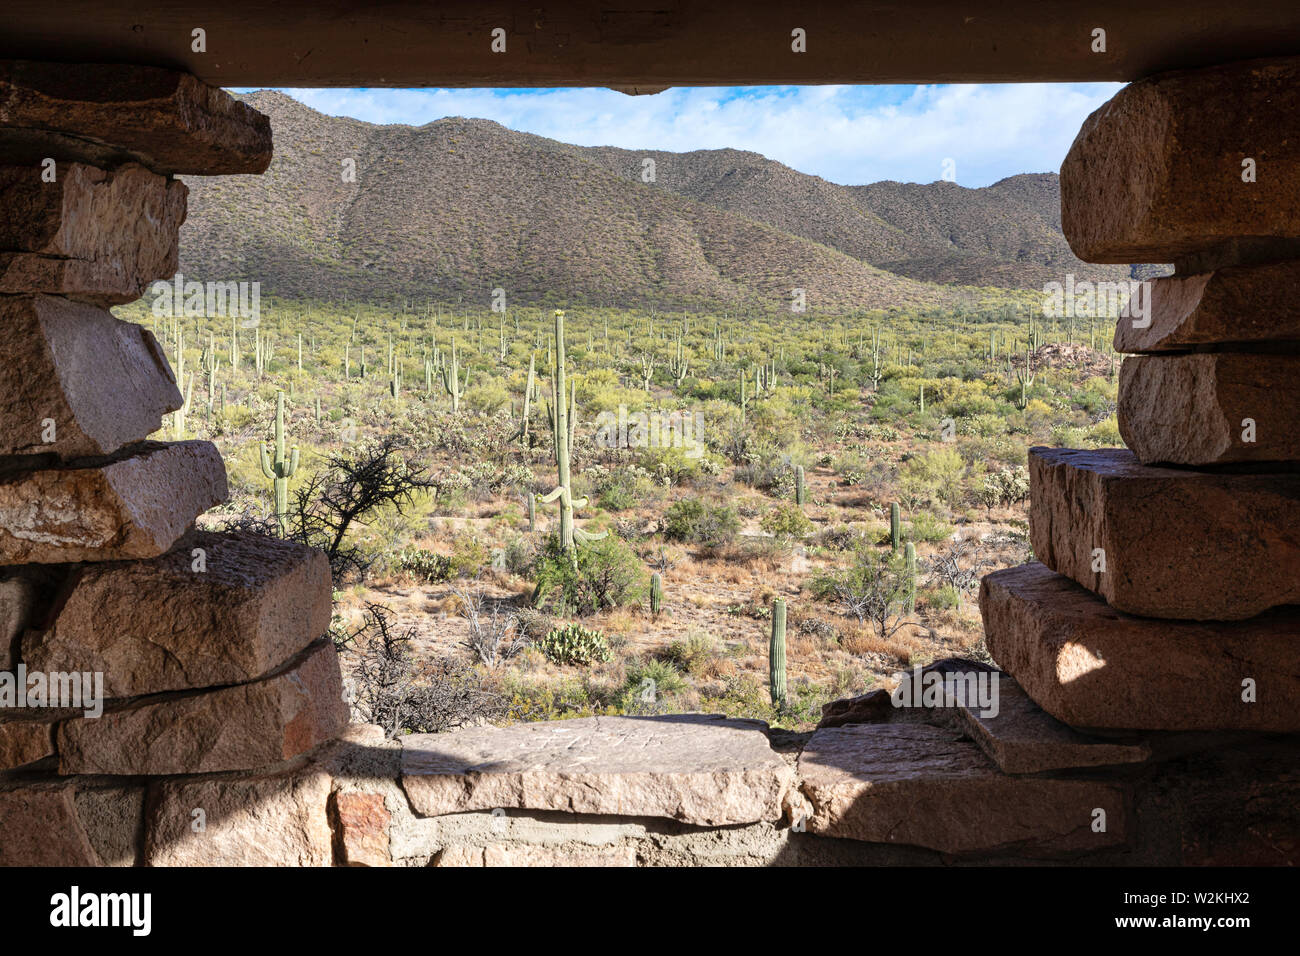 Looking through a stone hut out into a desert landscape, Saguaro National Park, West Unit, Tucson, Arizona Stock Photo